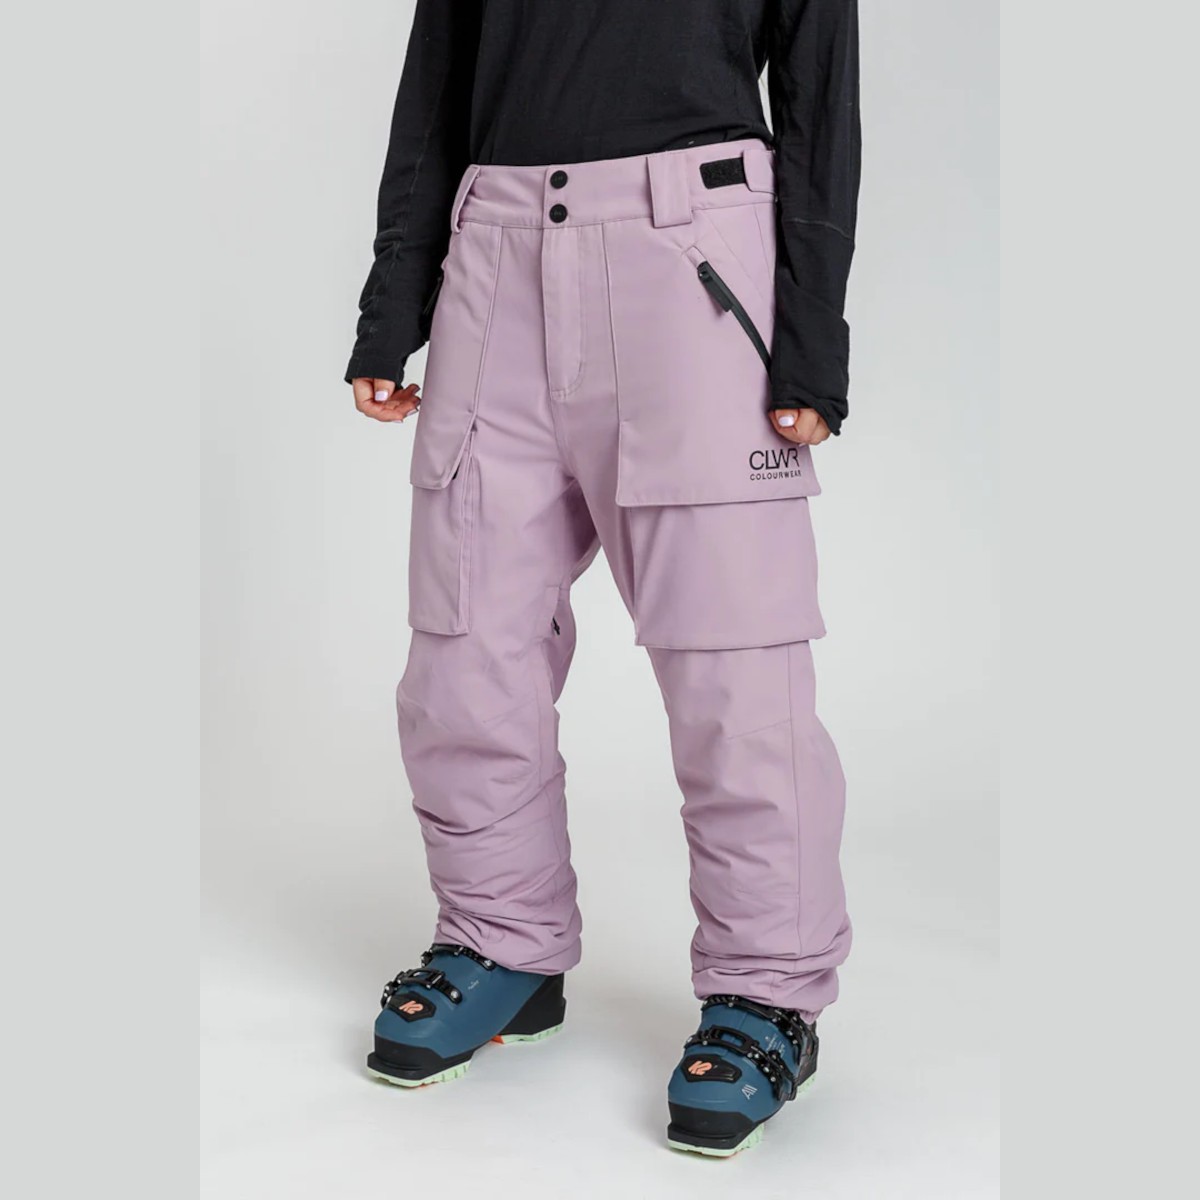 Colour Wear U Cargo Pants, Pantalones snowboard